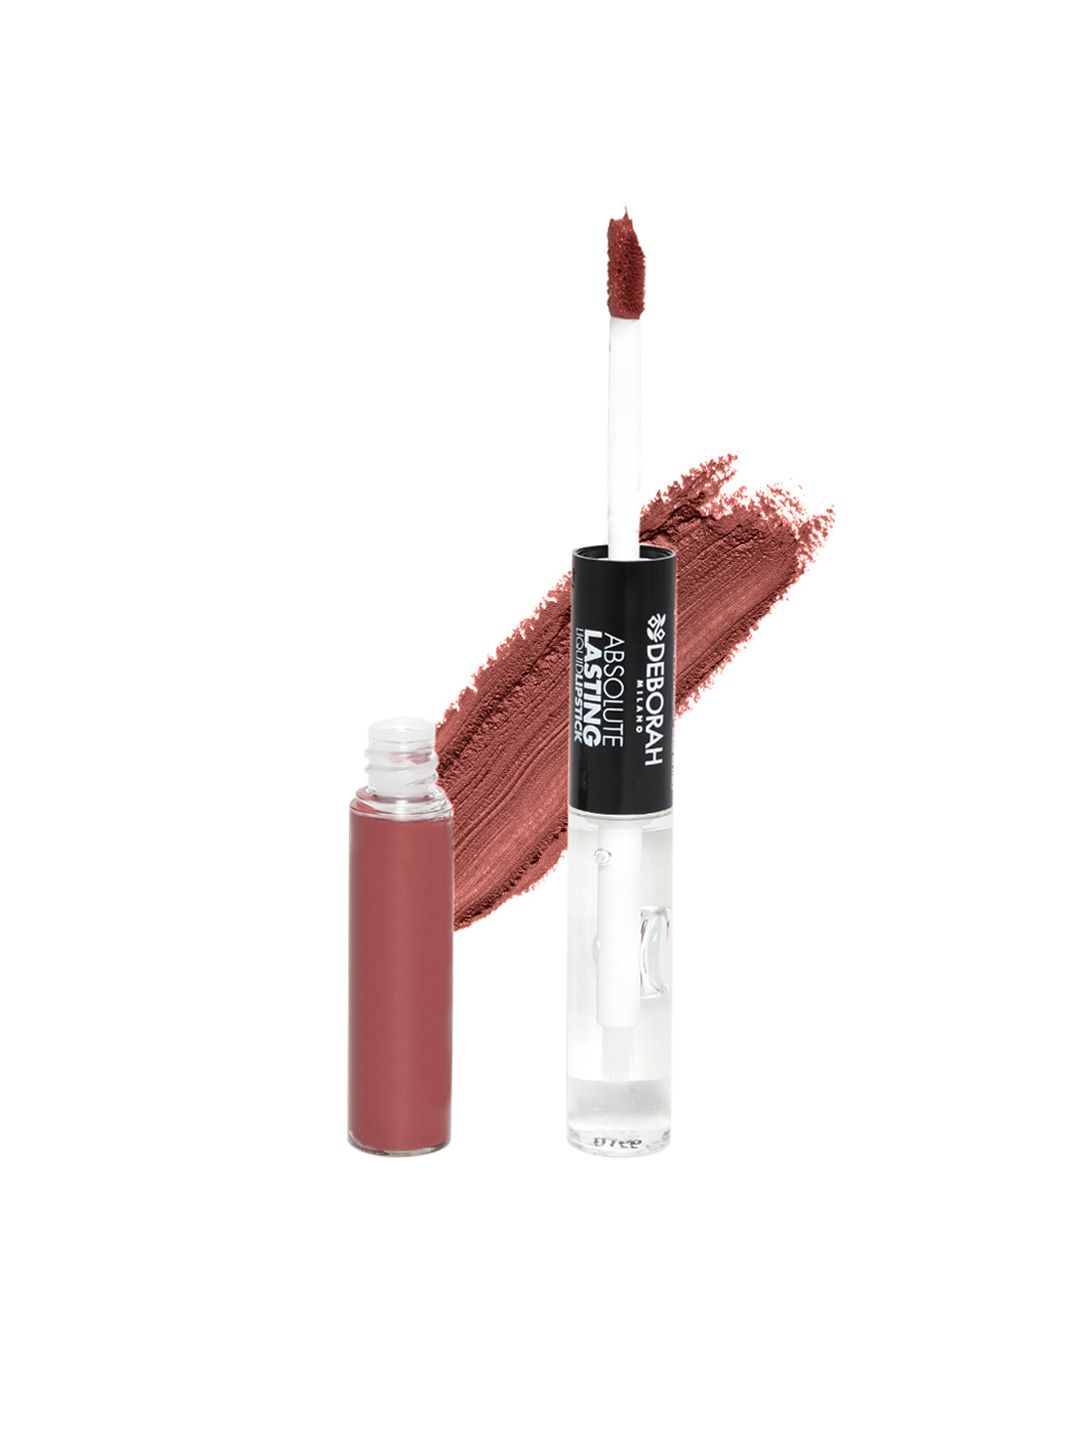 Deborah Milano Absolute Lasting Light Brown Liquid Lipstick with Gloss 13